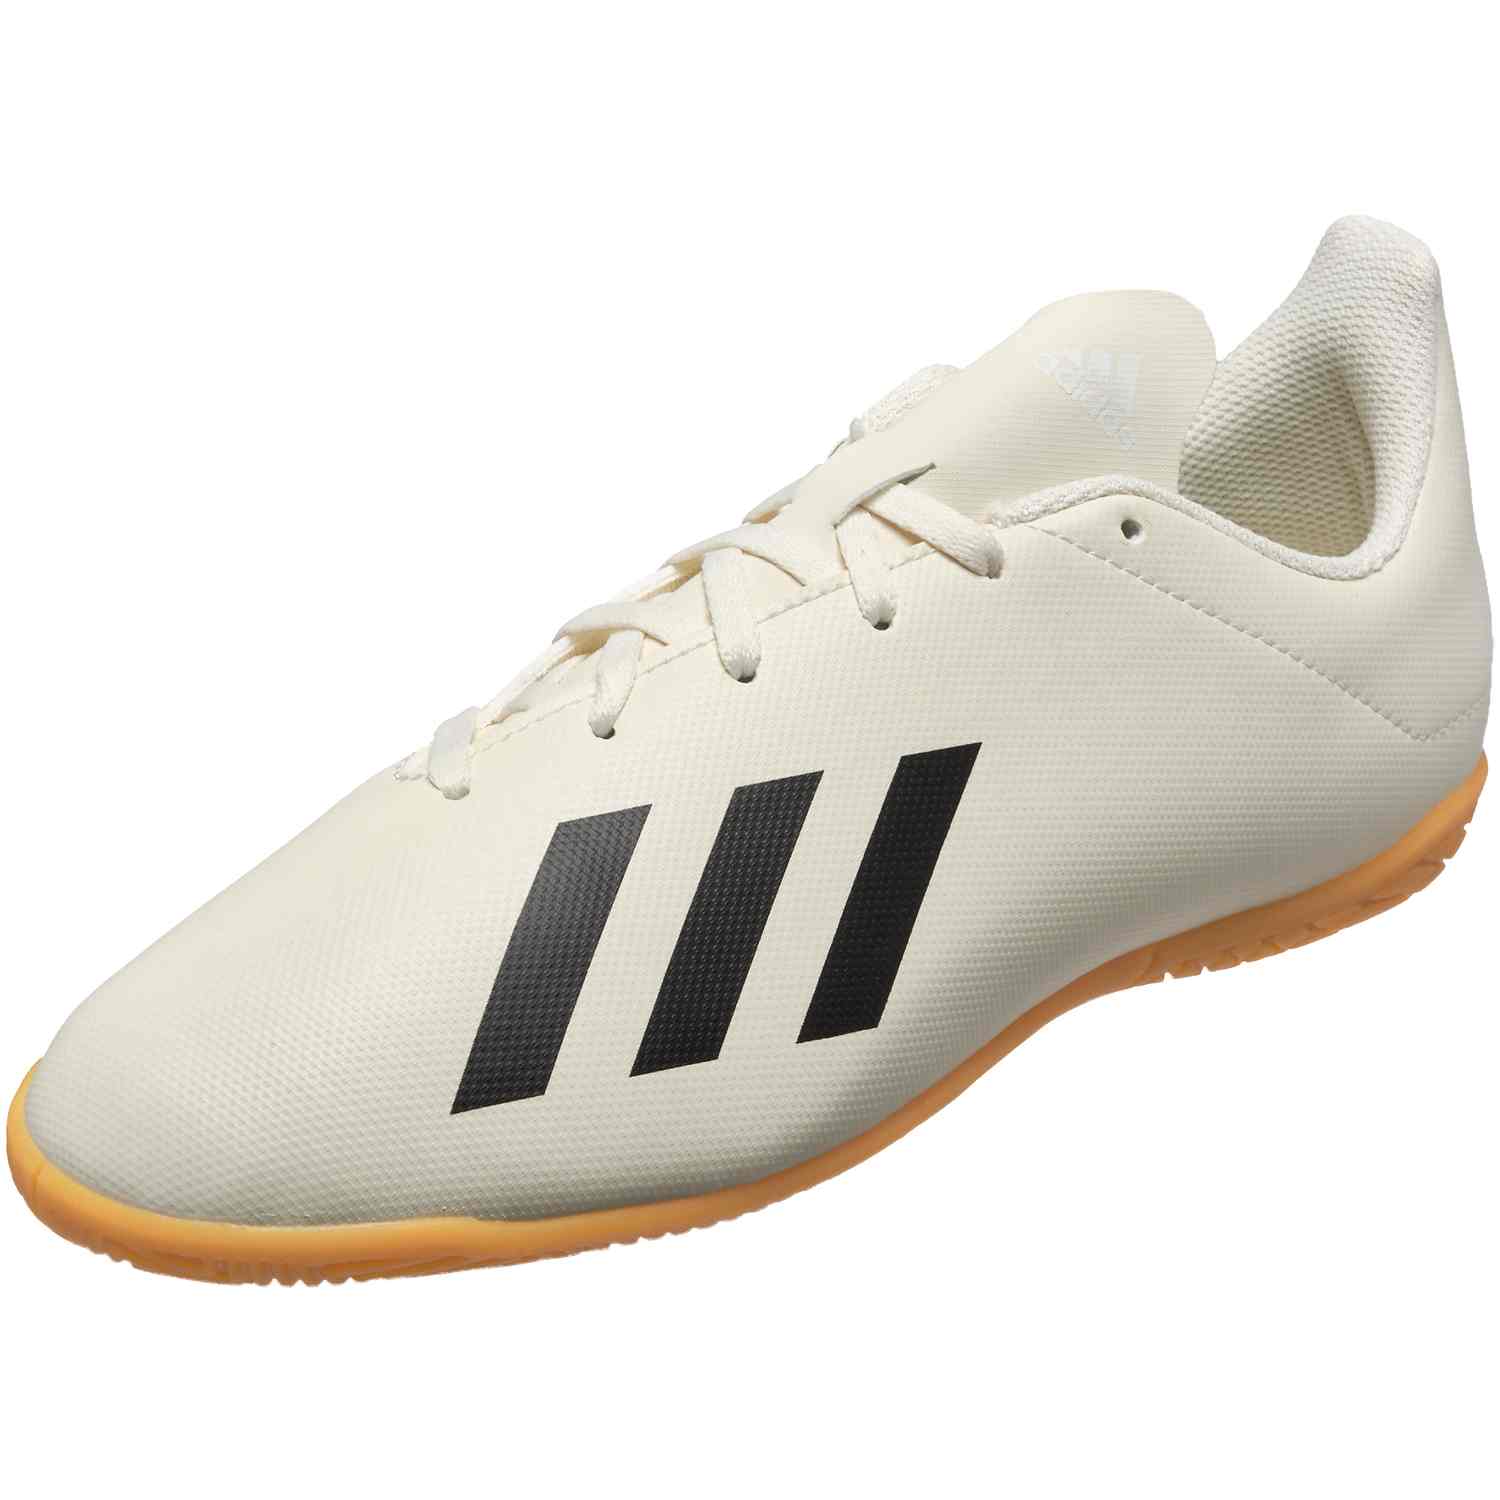 adidas X Tango 18.4 IN - Youth - Off White/White/Black - SoccerPro